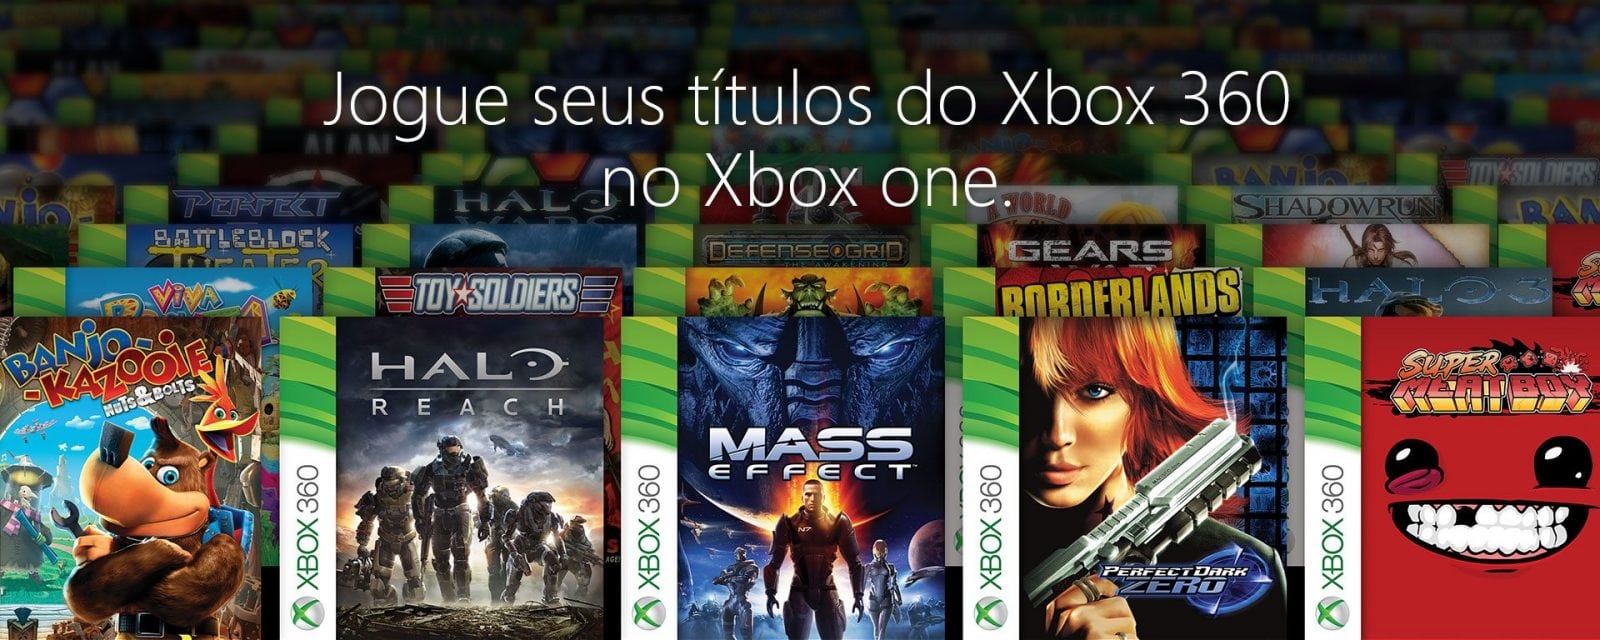 Borderlands Game Of The Year Edition Seminovo – Xbox 360 - Stop